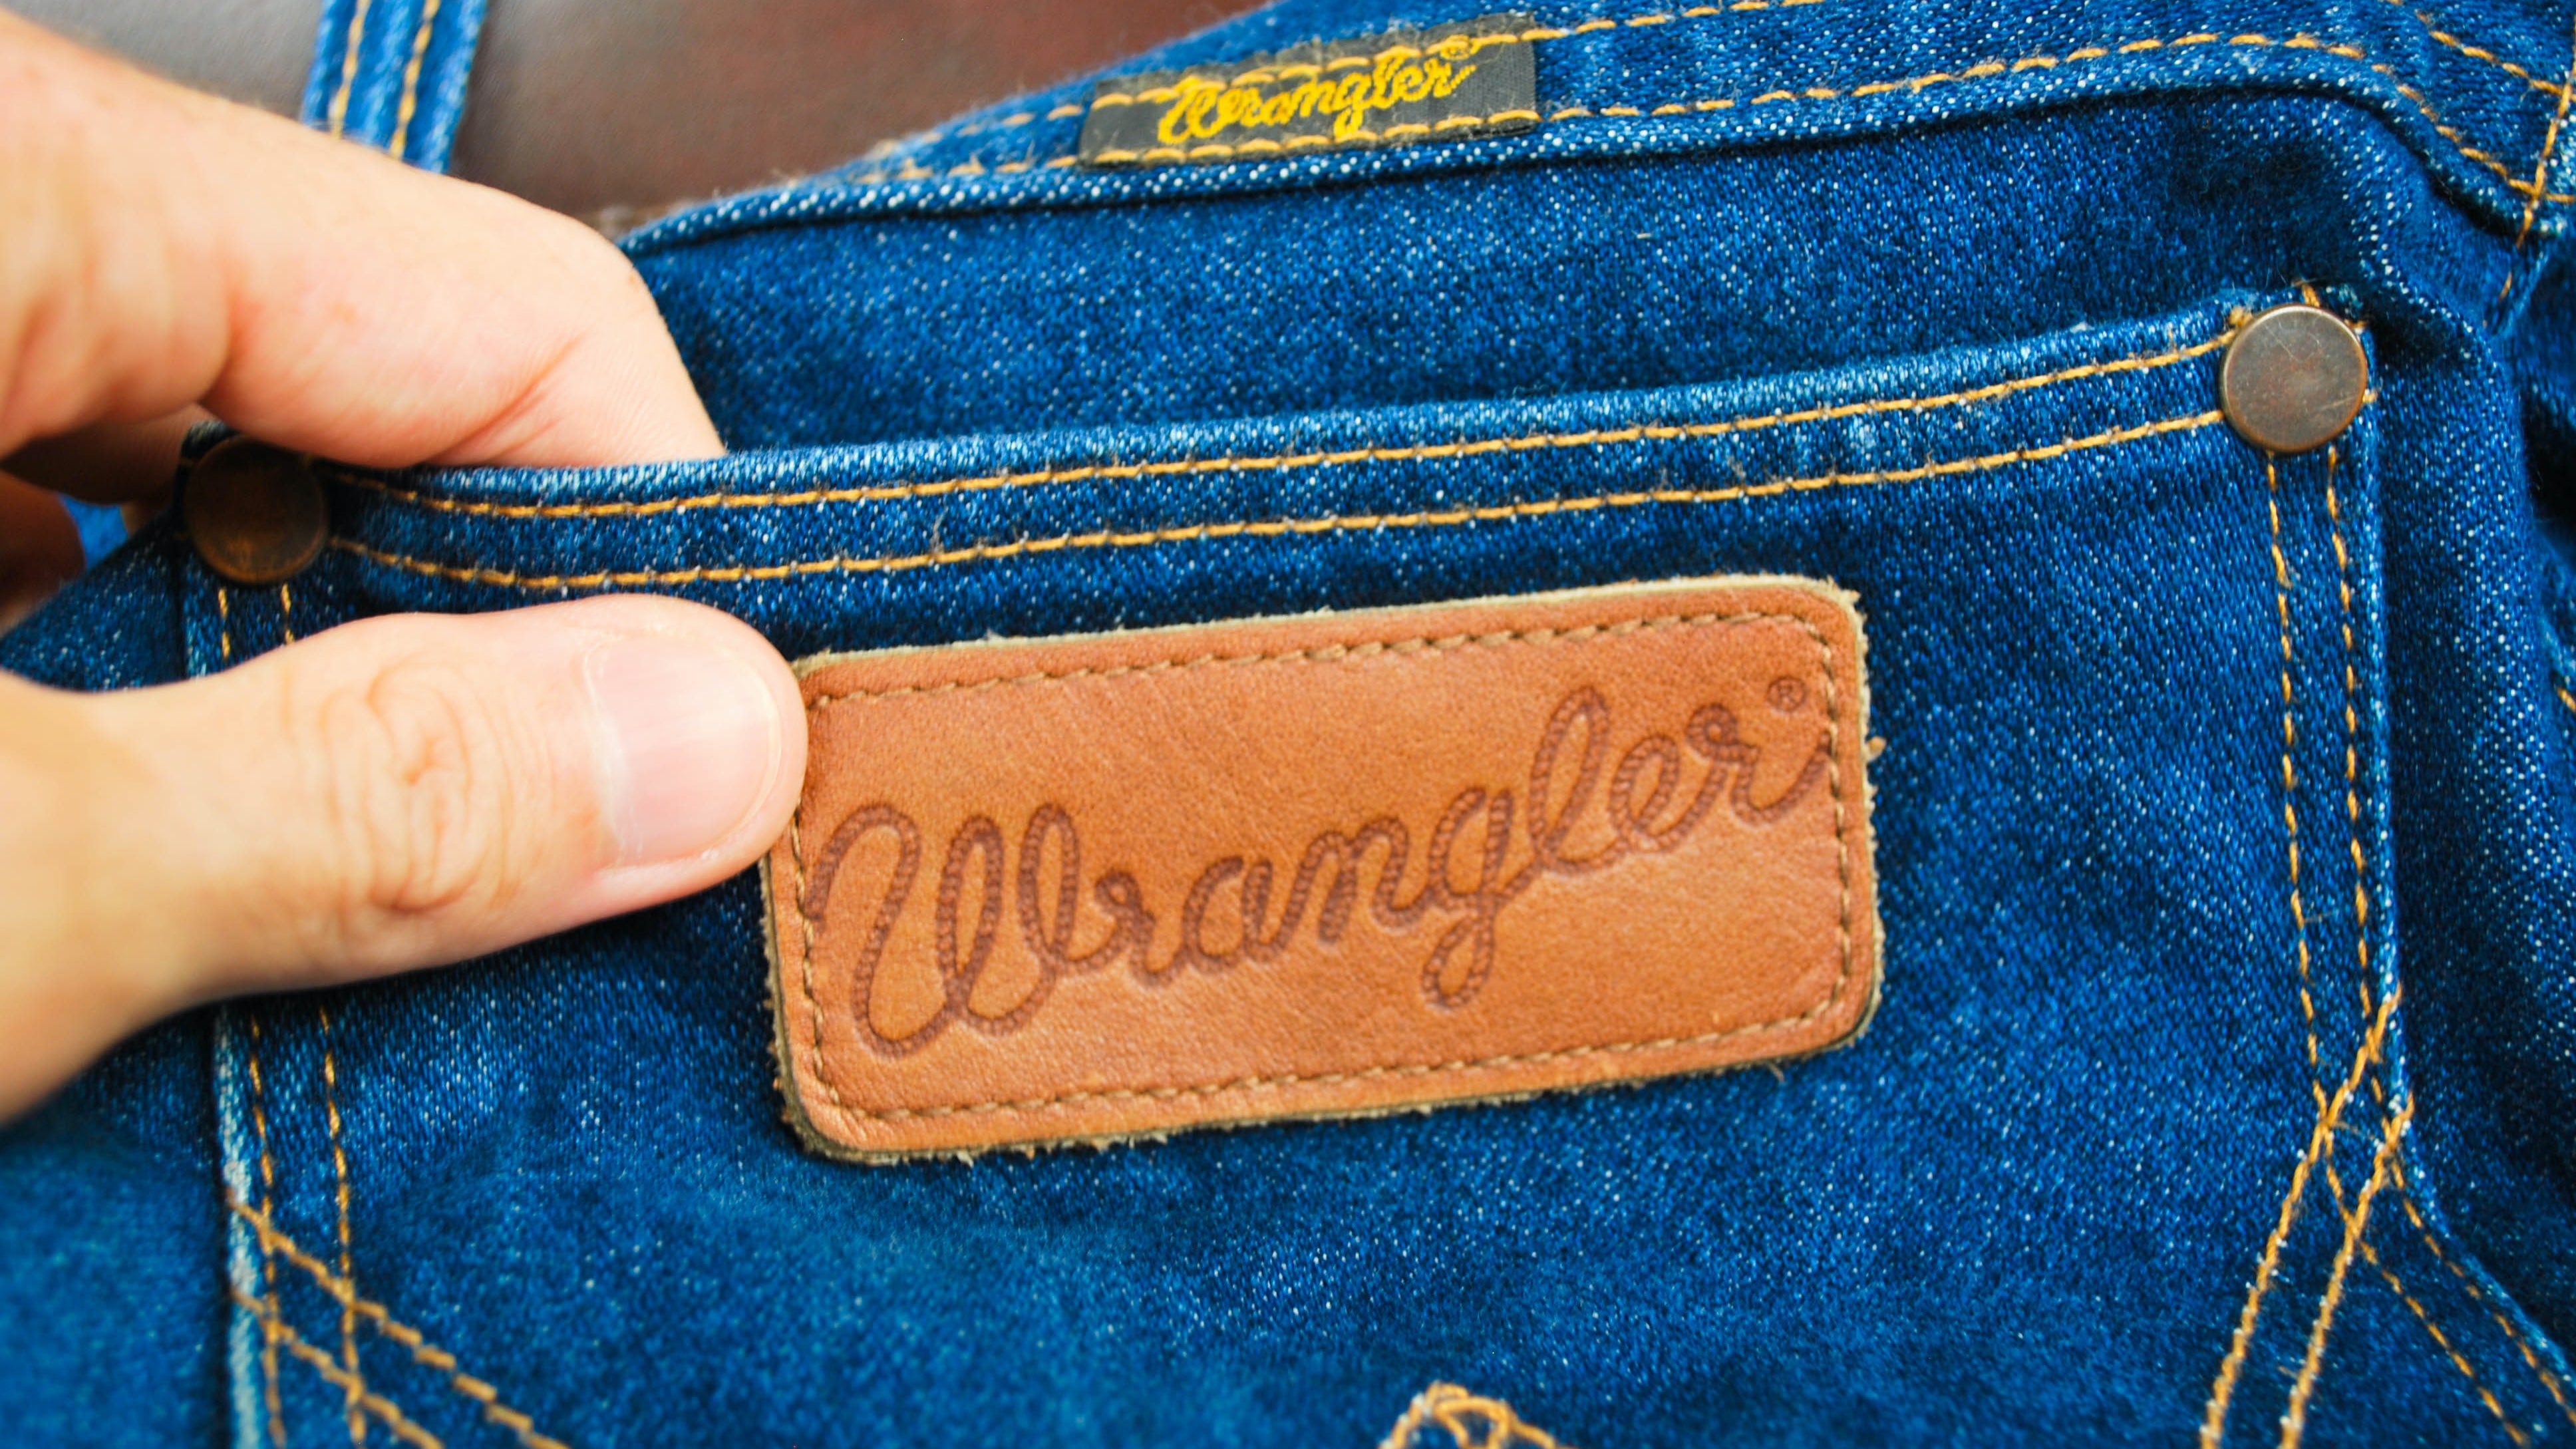 Wrangler Jeans Are Headed to China | BoF